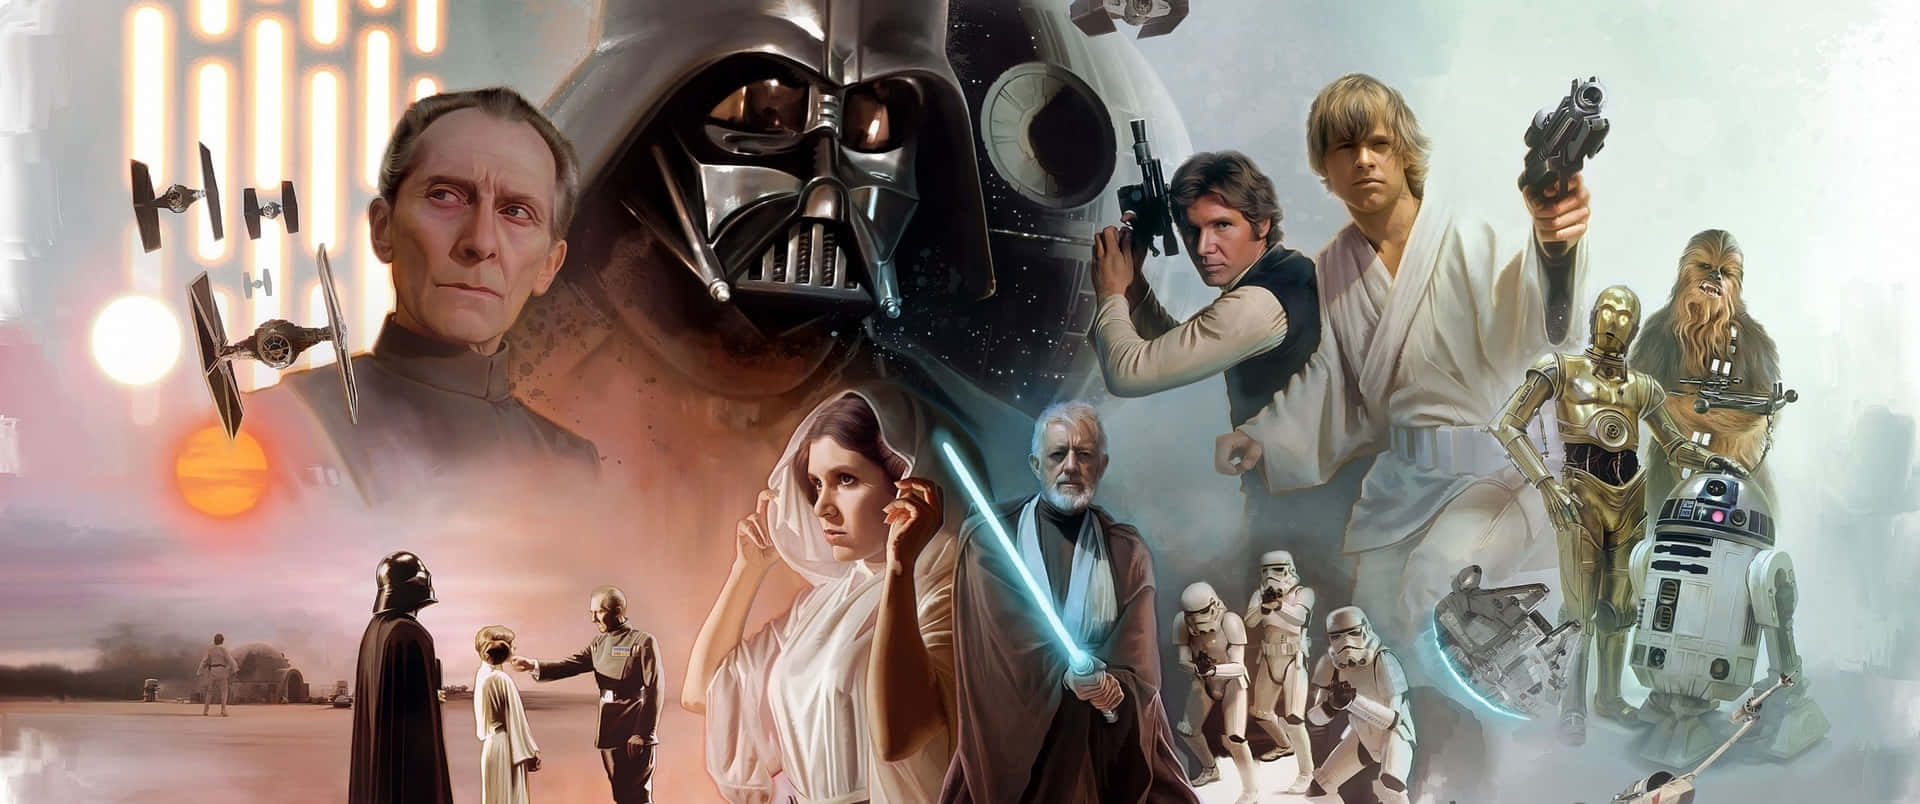 Epic Star Wars Poster Wallpaper